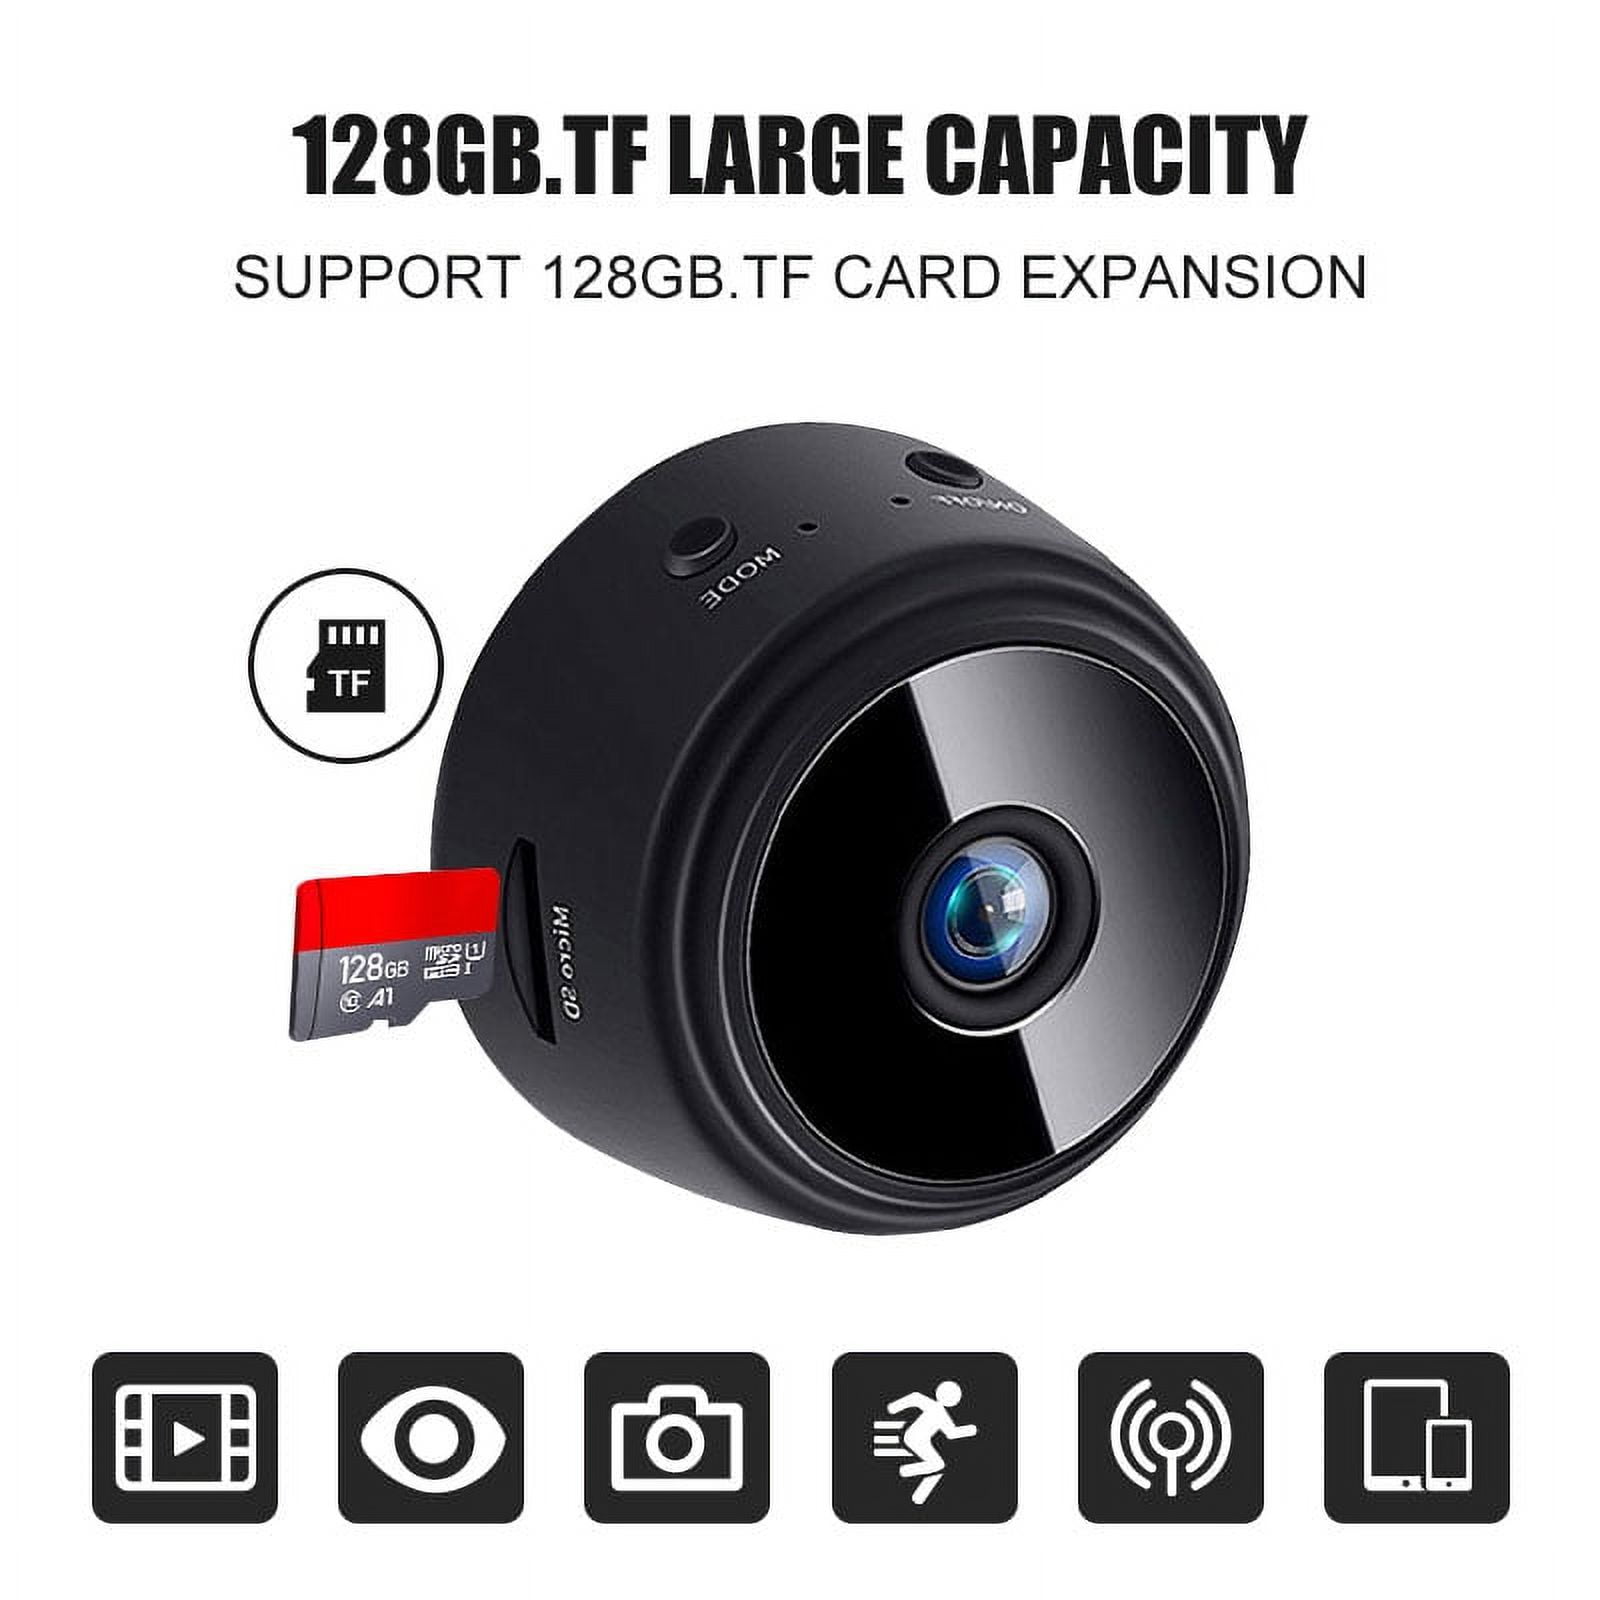 Magnetic Mini Security Camera, Mini Camara Ocultas Con Video Y WiFi, Mini  5g Wireless WiFi Camera 1080p HD - Night Vision Included, Full HD WiFi  Smart